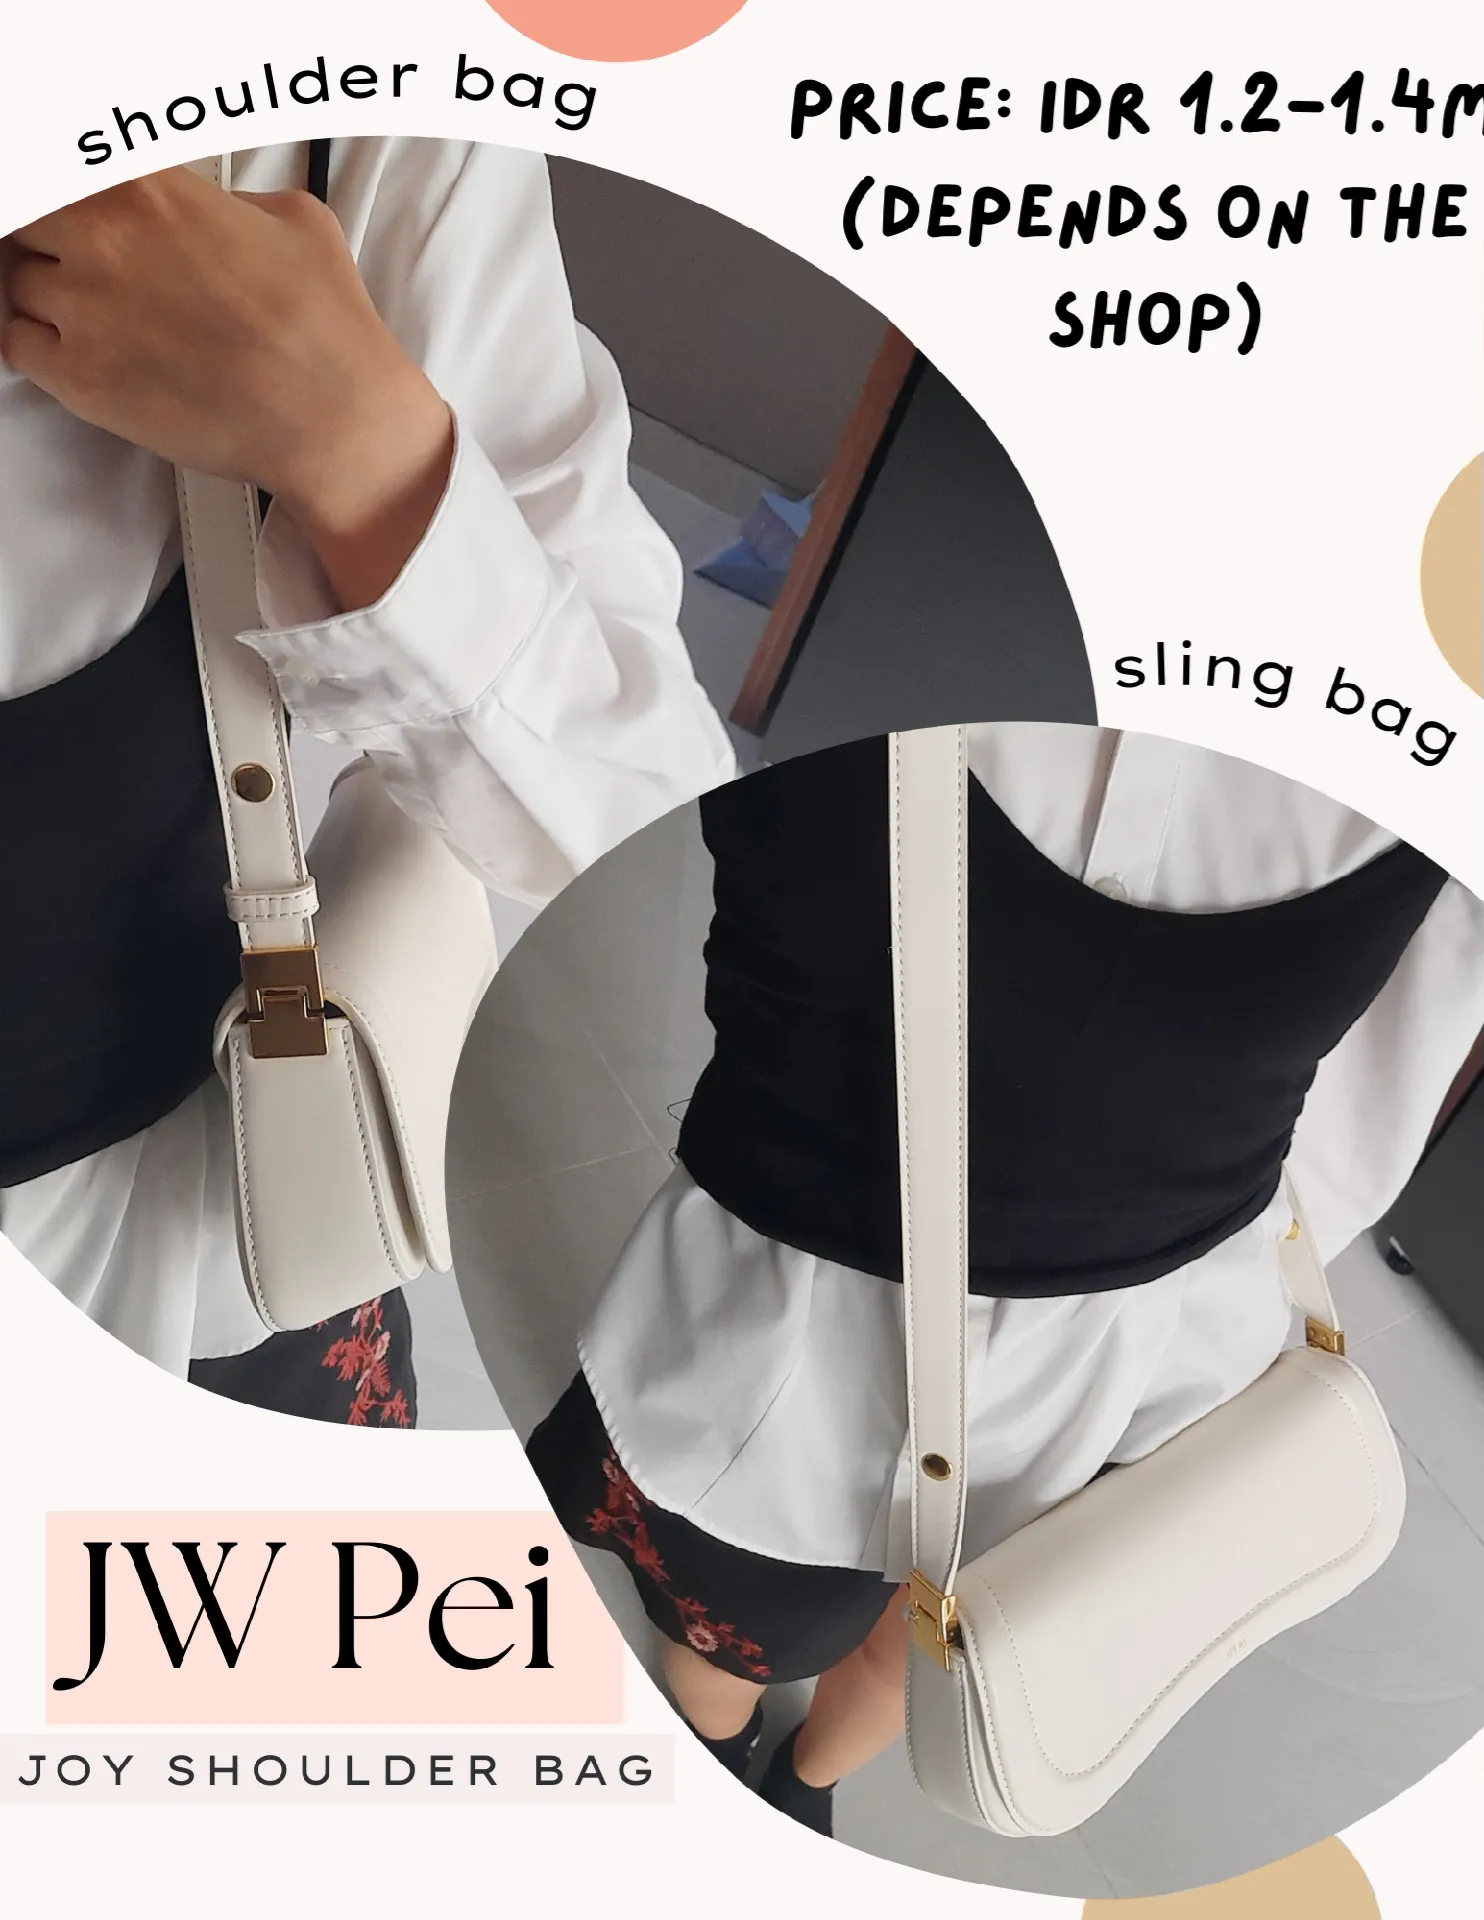 JW Pei Joy Shoulder Bag